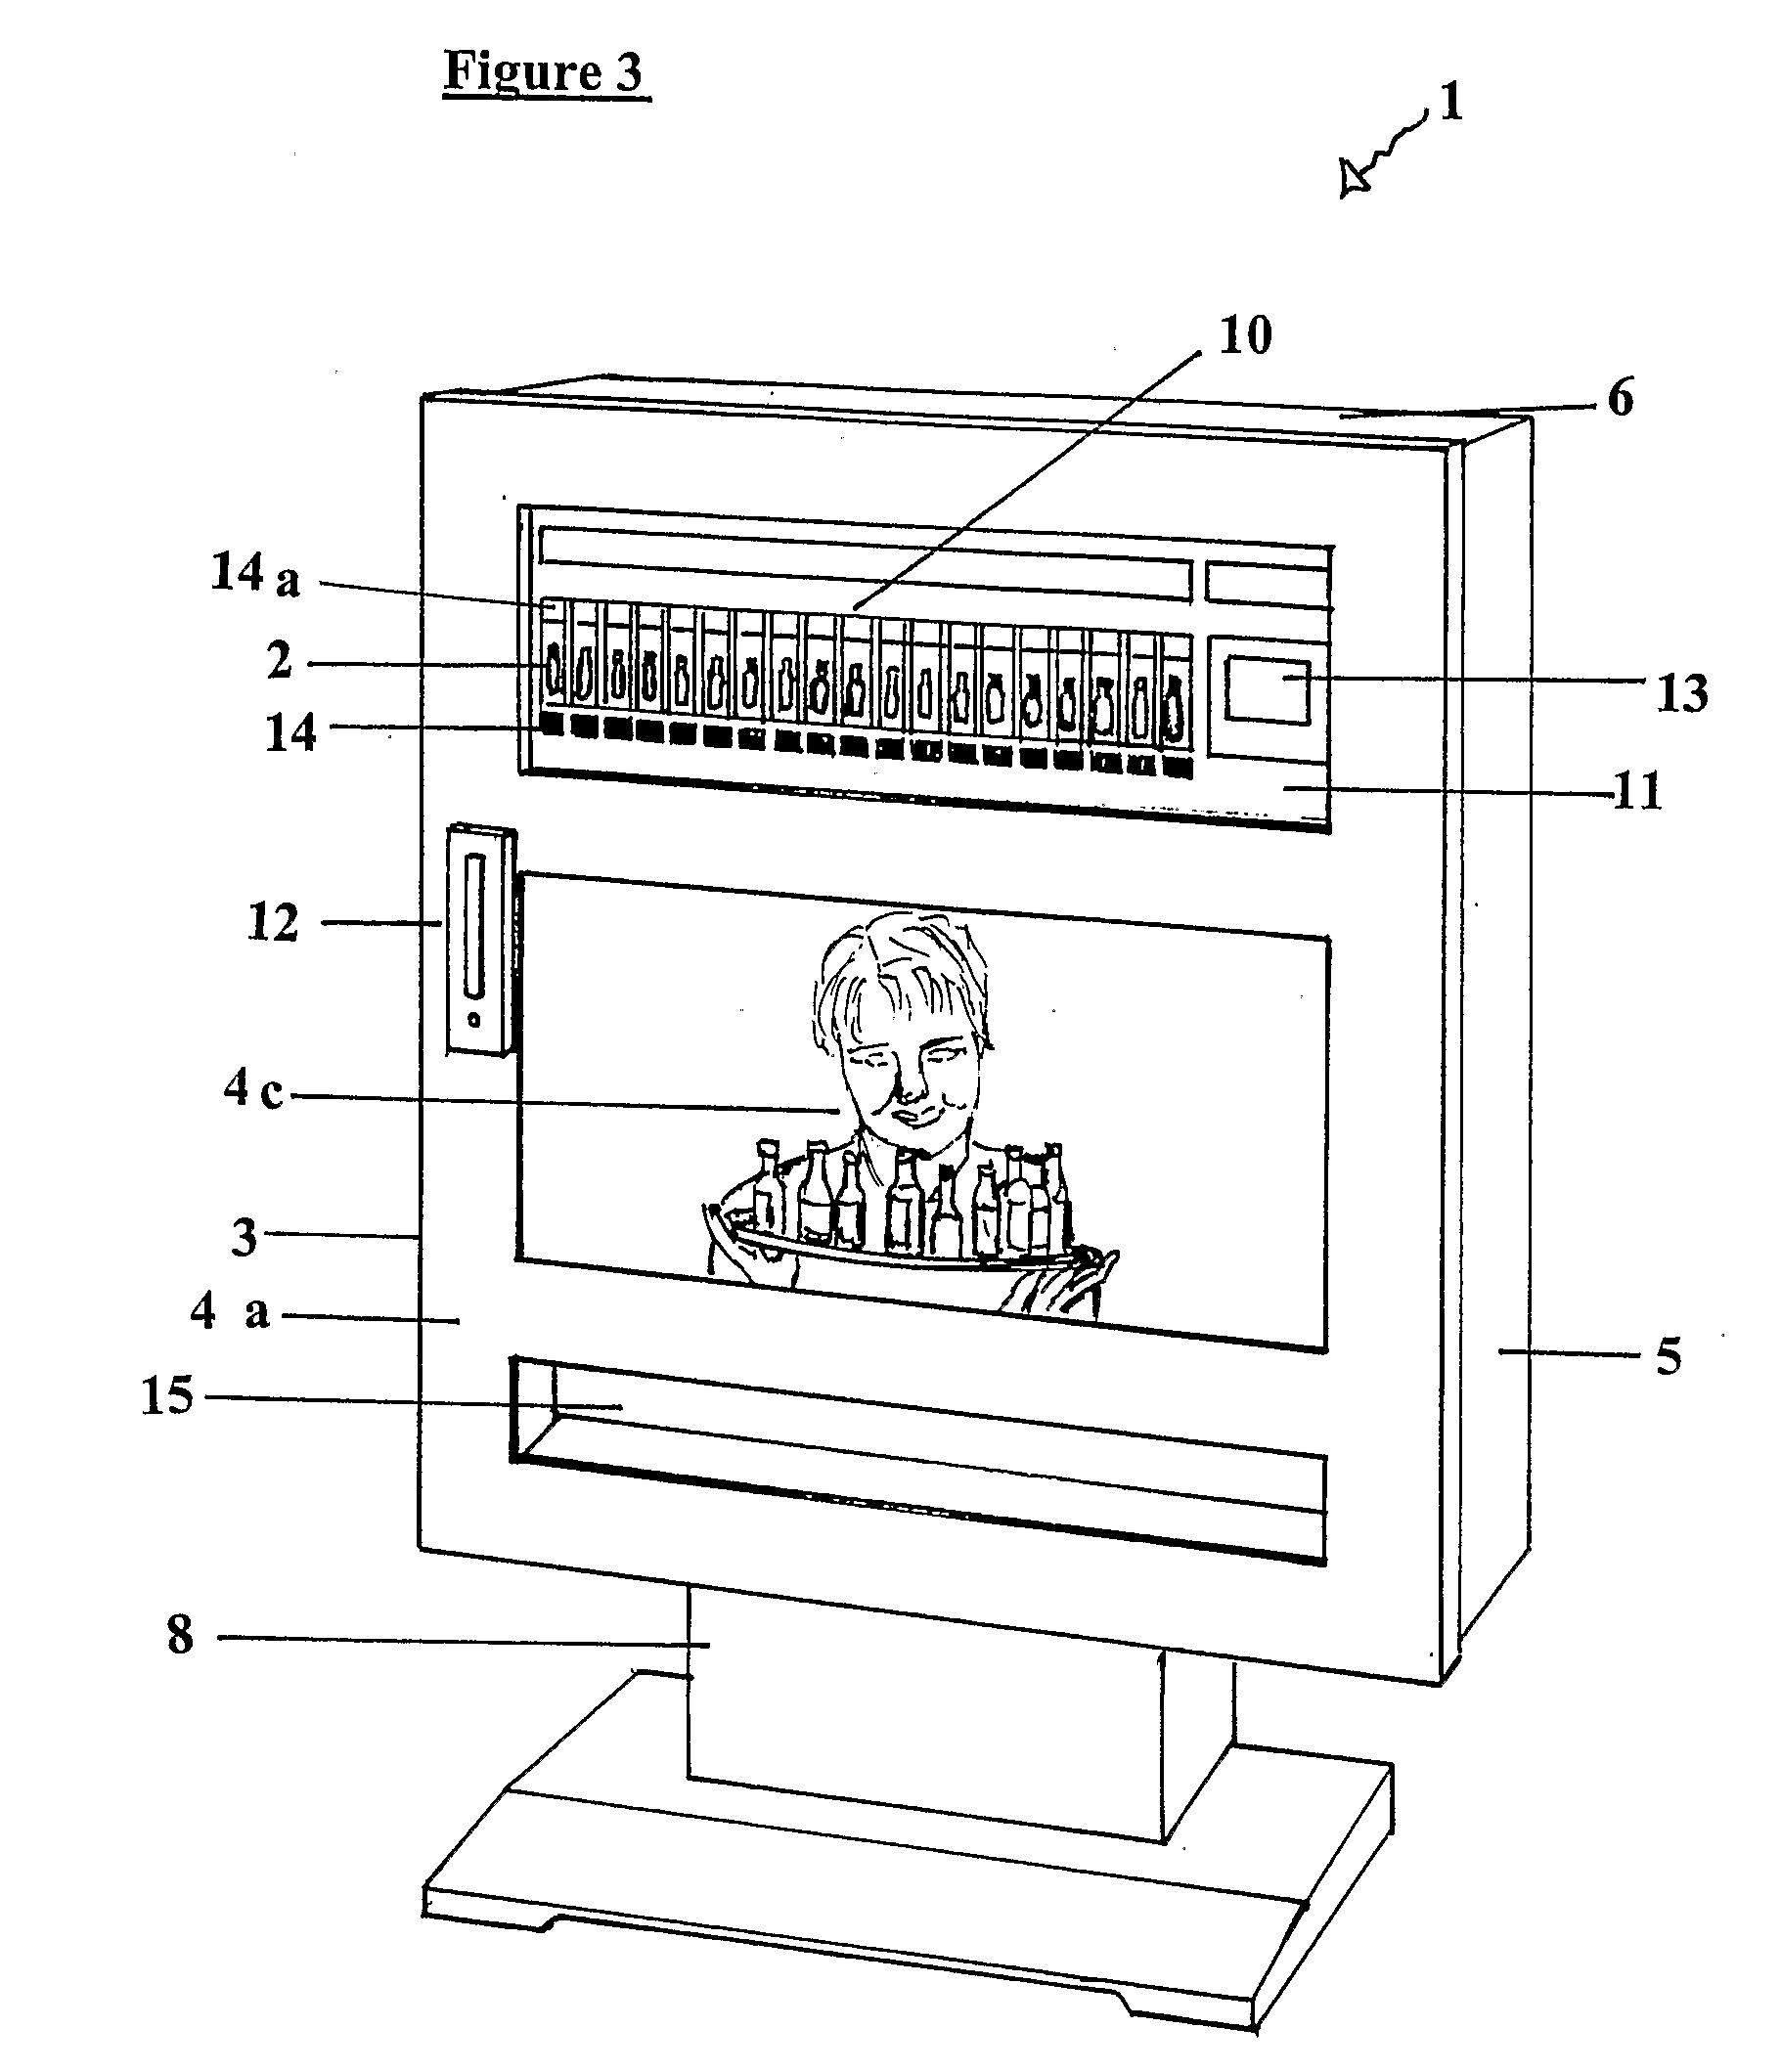 Dispensing Apparatus